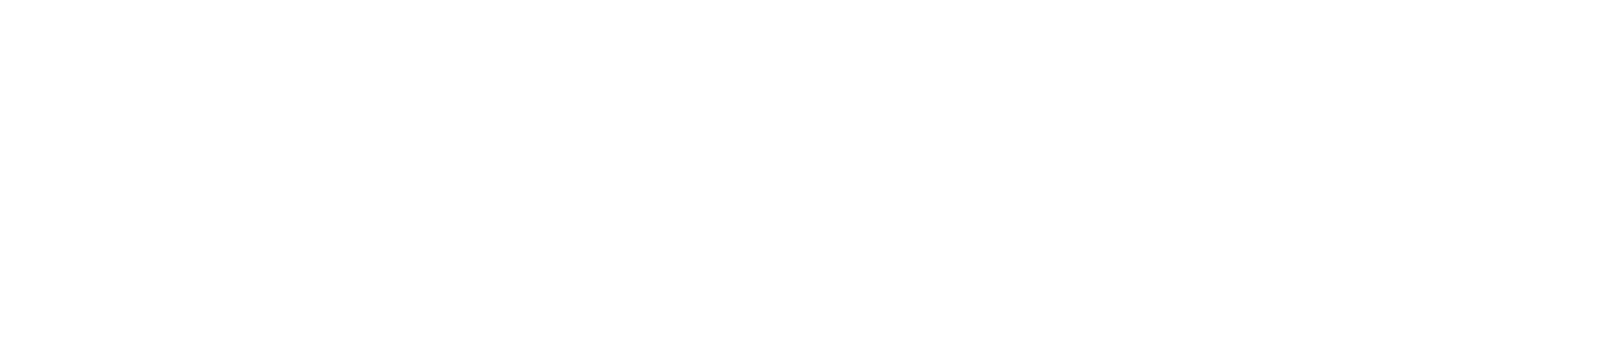 nyc-cultural-agenda-fund